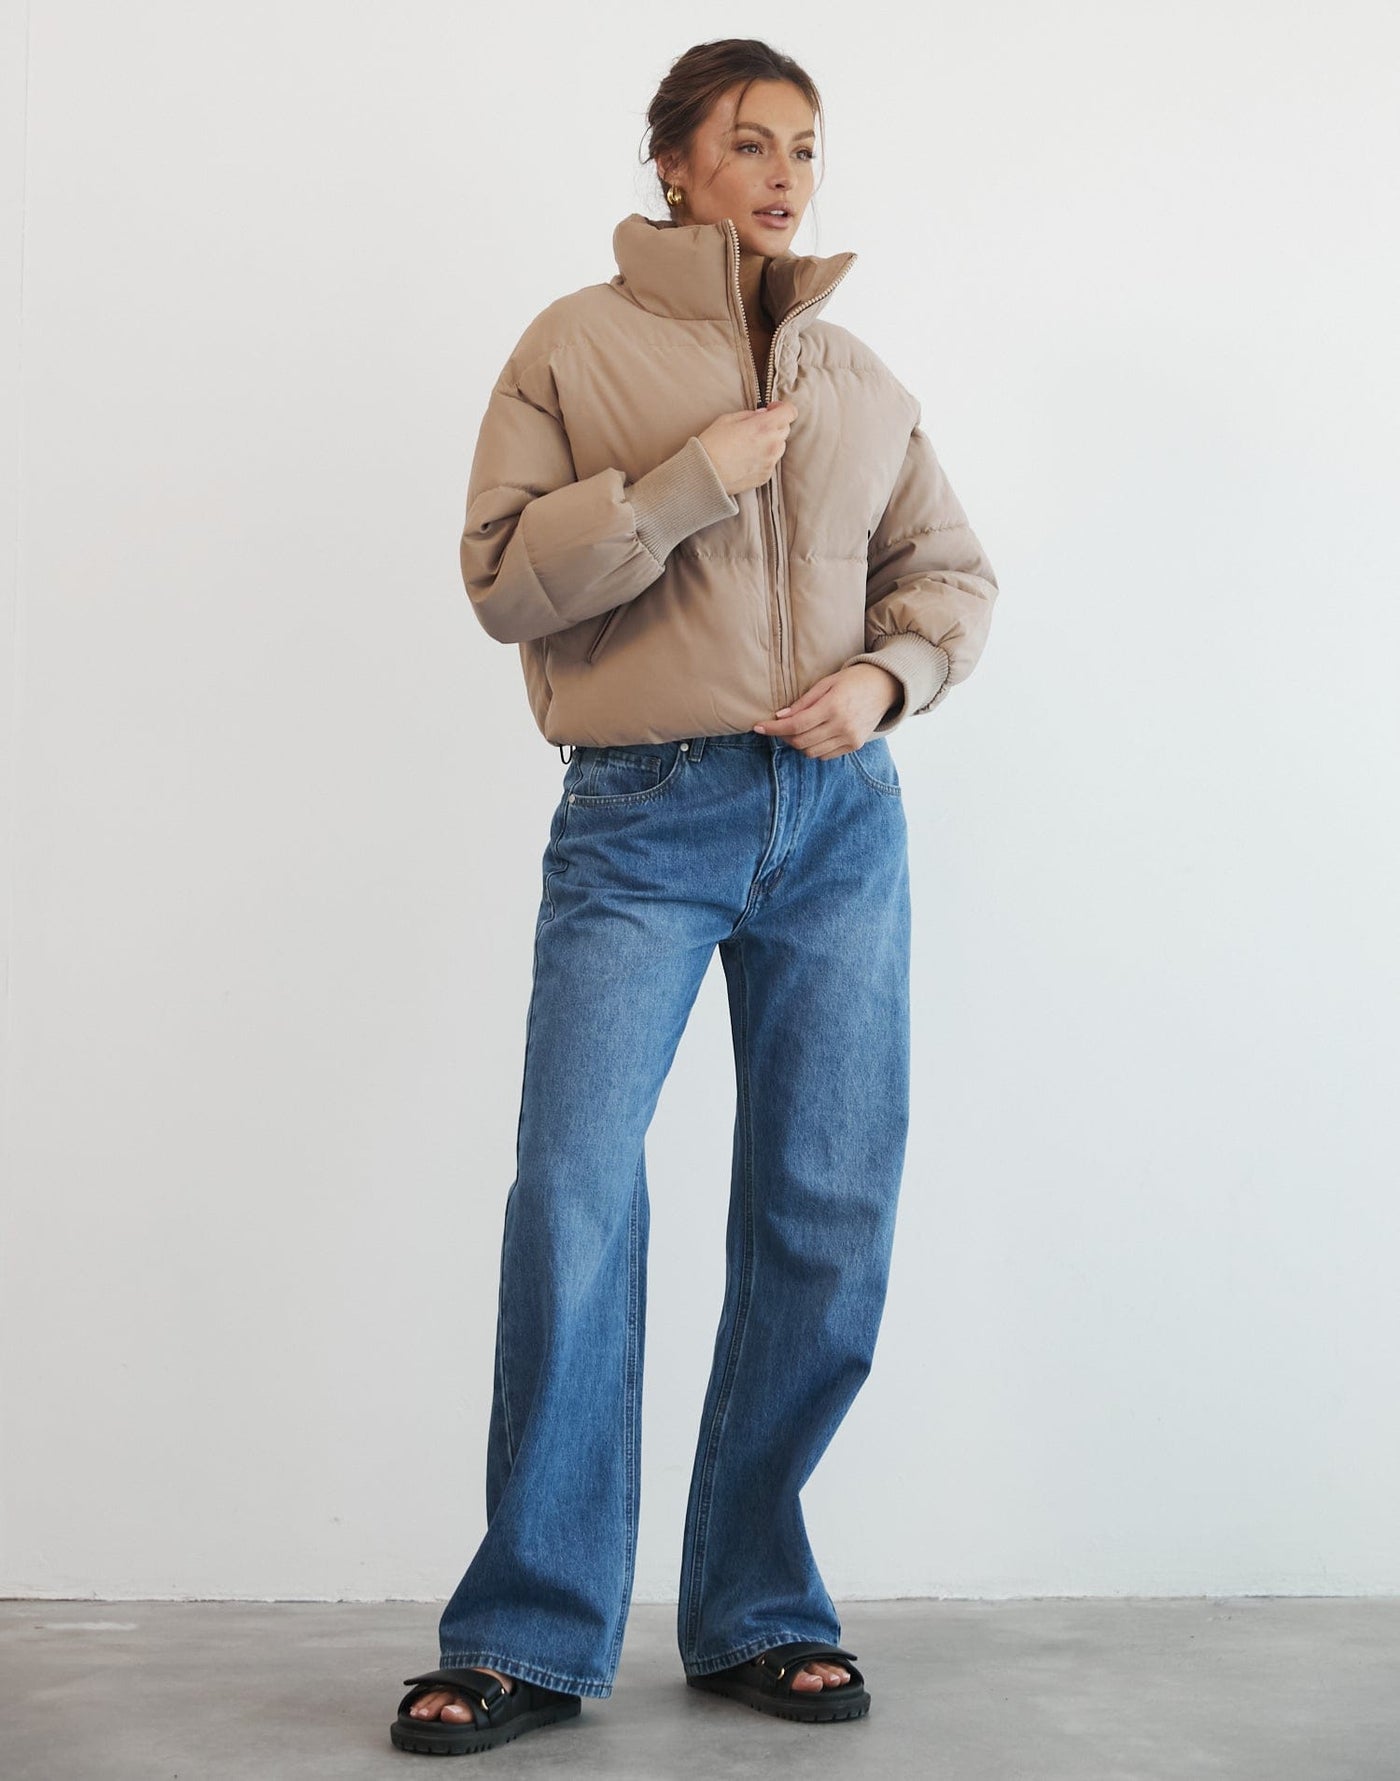 Louisiana Puffer Jacket (Latte) - Neutral Brown Long Sleeve Jacket - Women's Outerwear - Charcoal Clothing